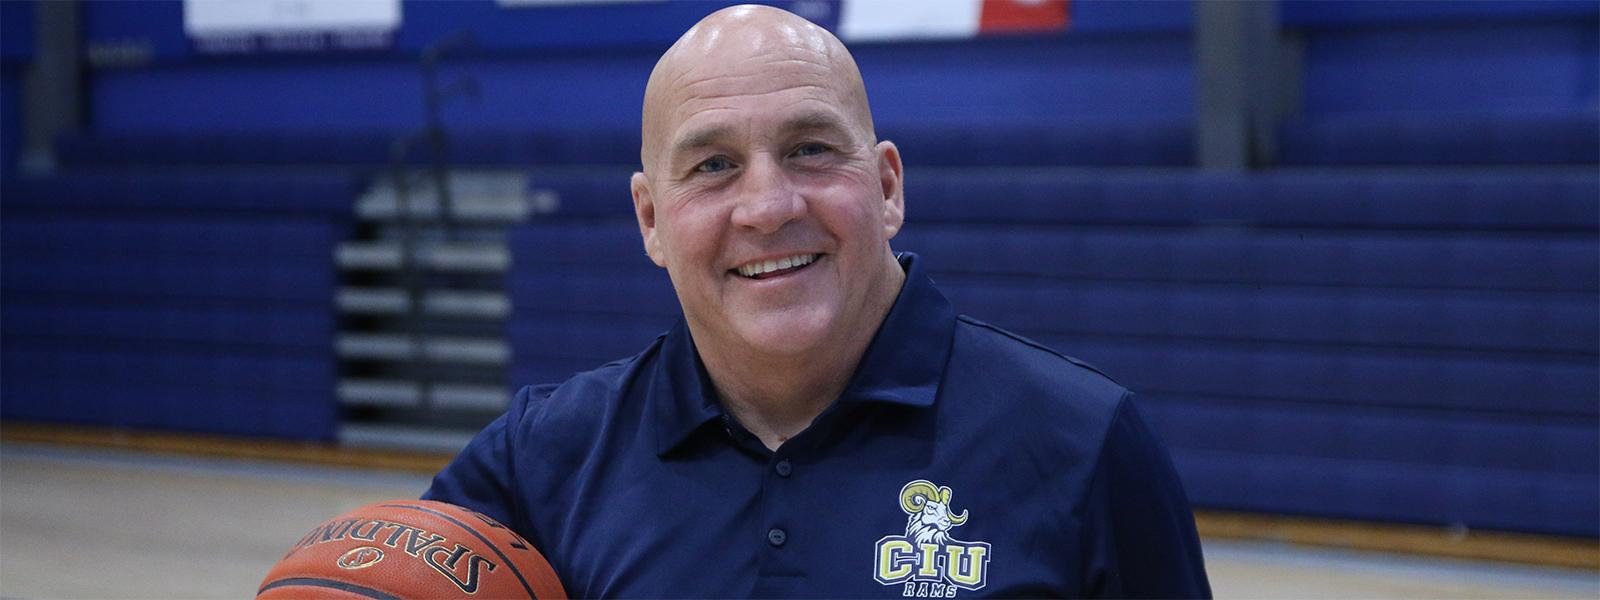 New CIU Rams women's head basketball coach Mike Fitzpatrick.  